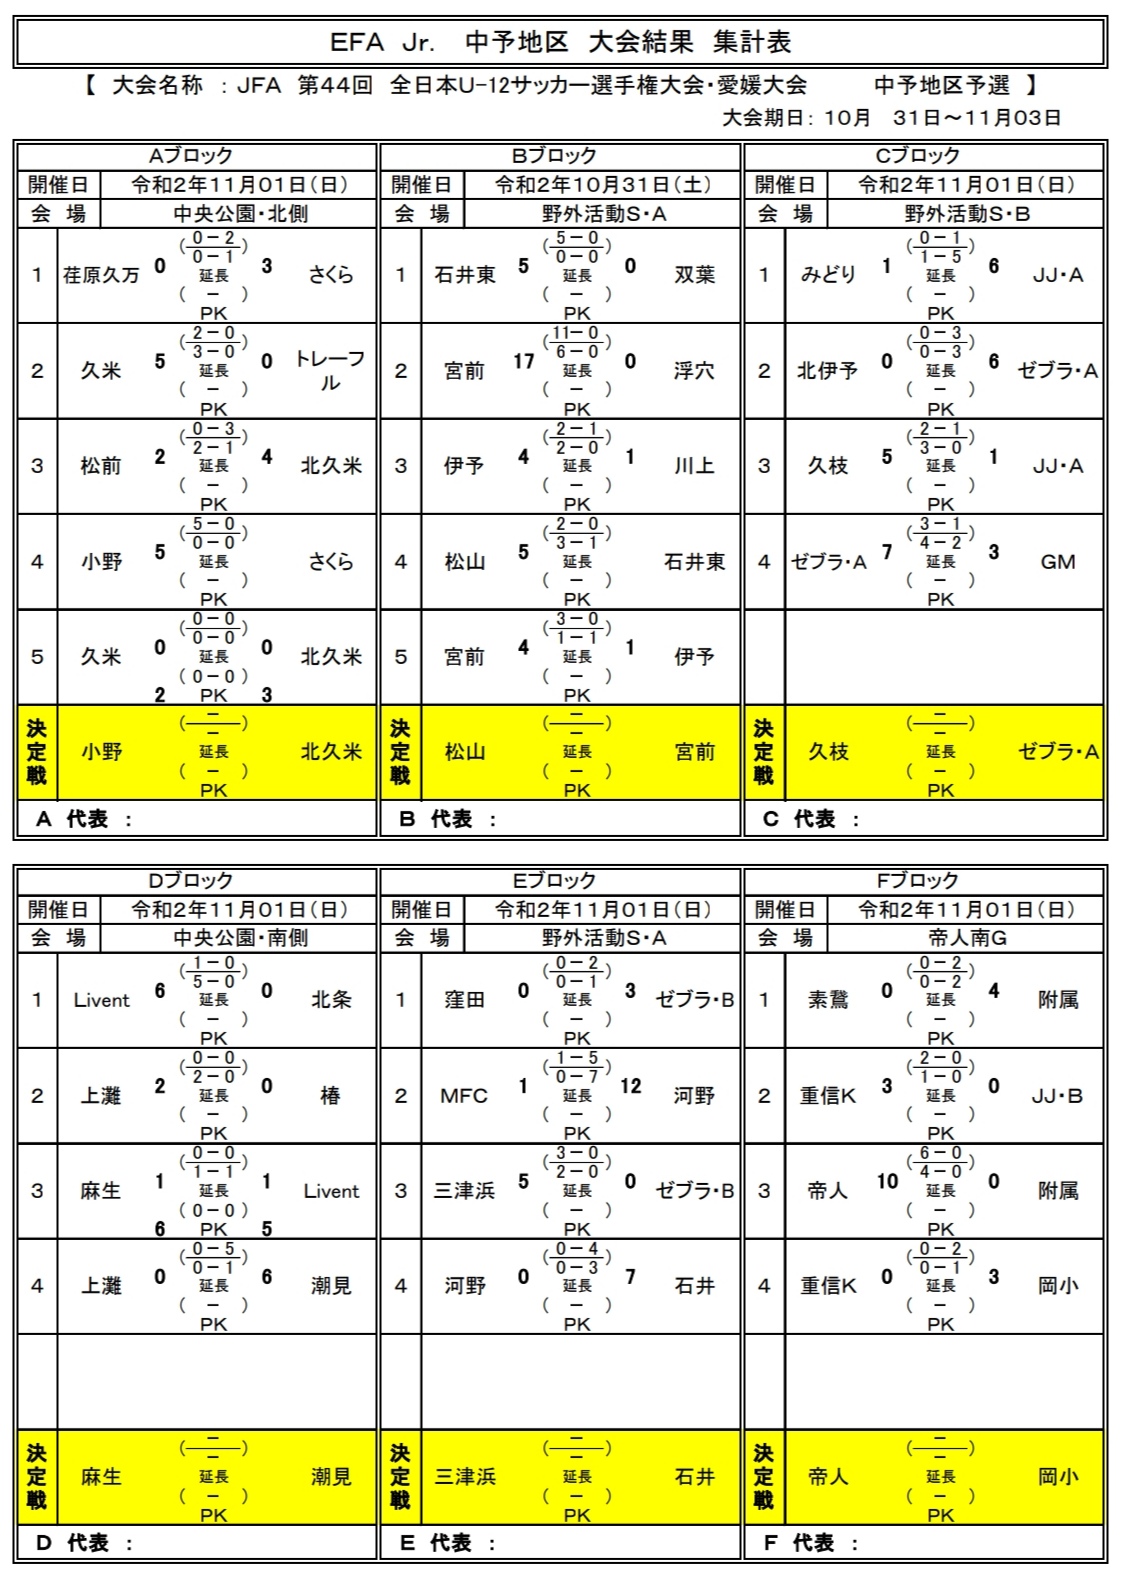 愛媛FCの年度別成績一覧